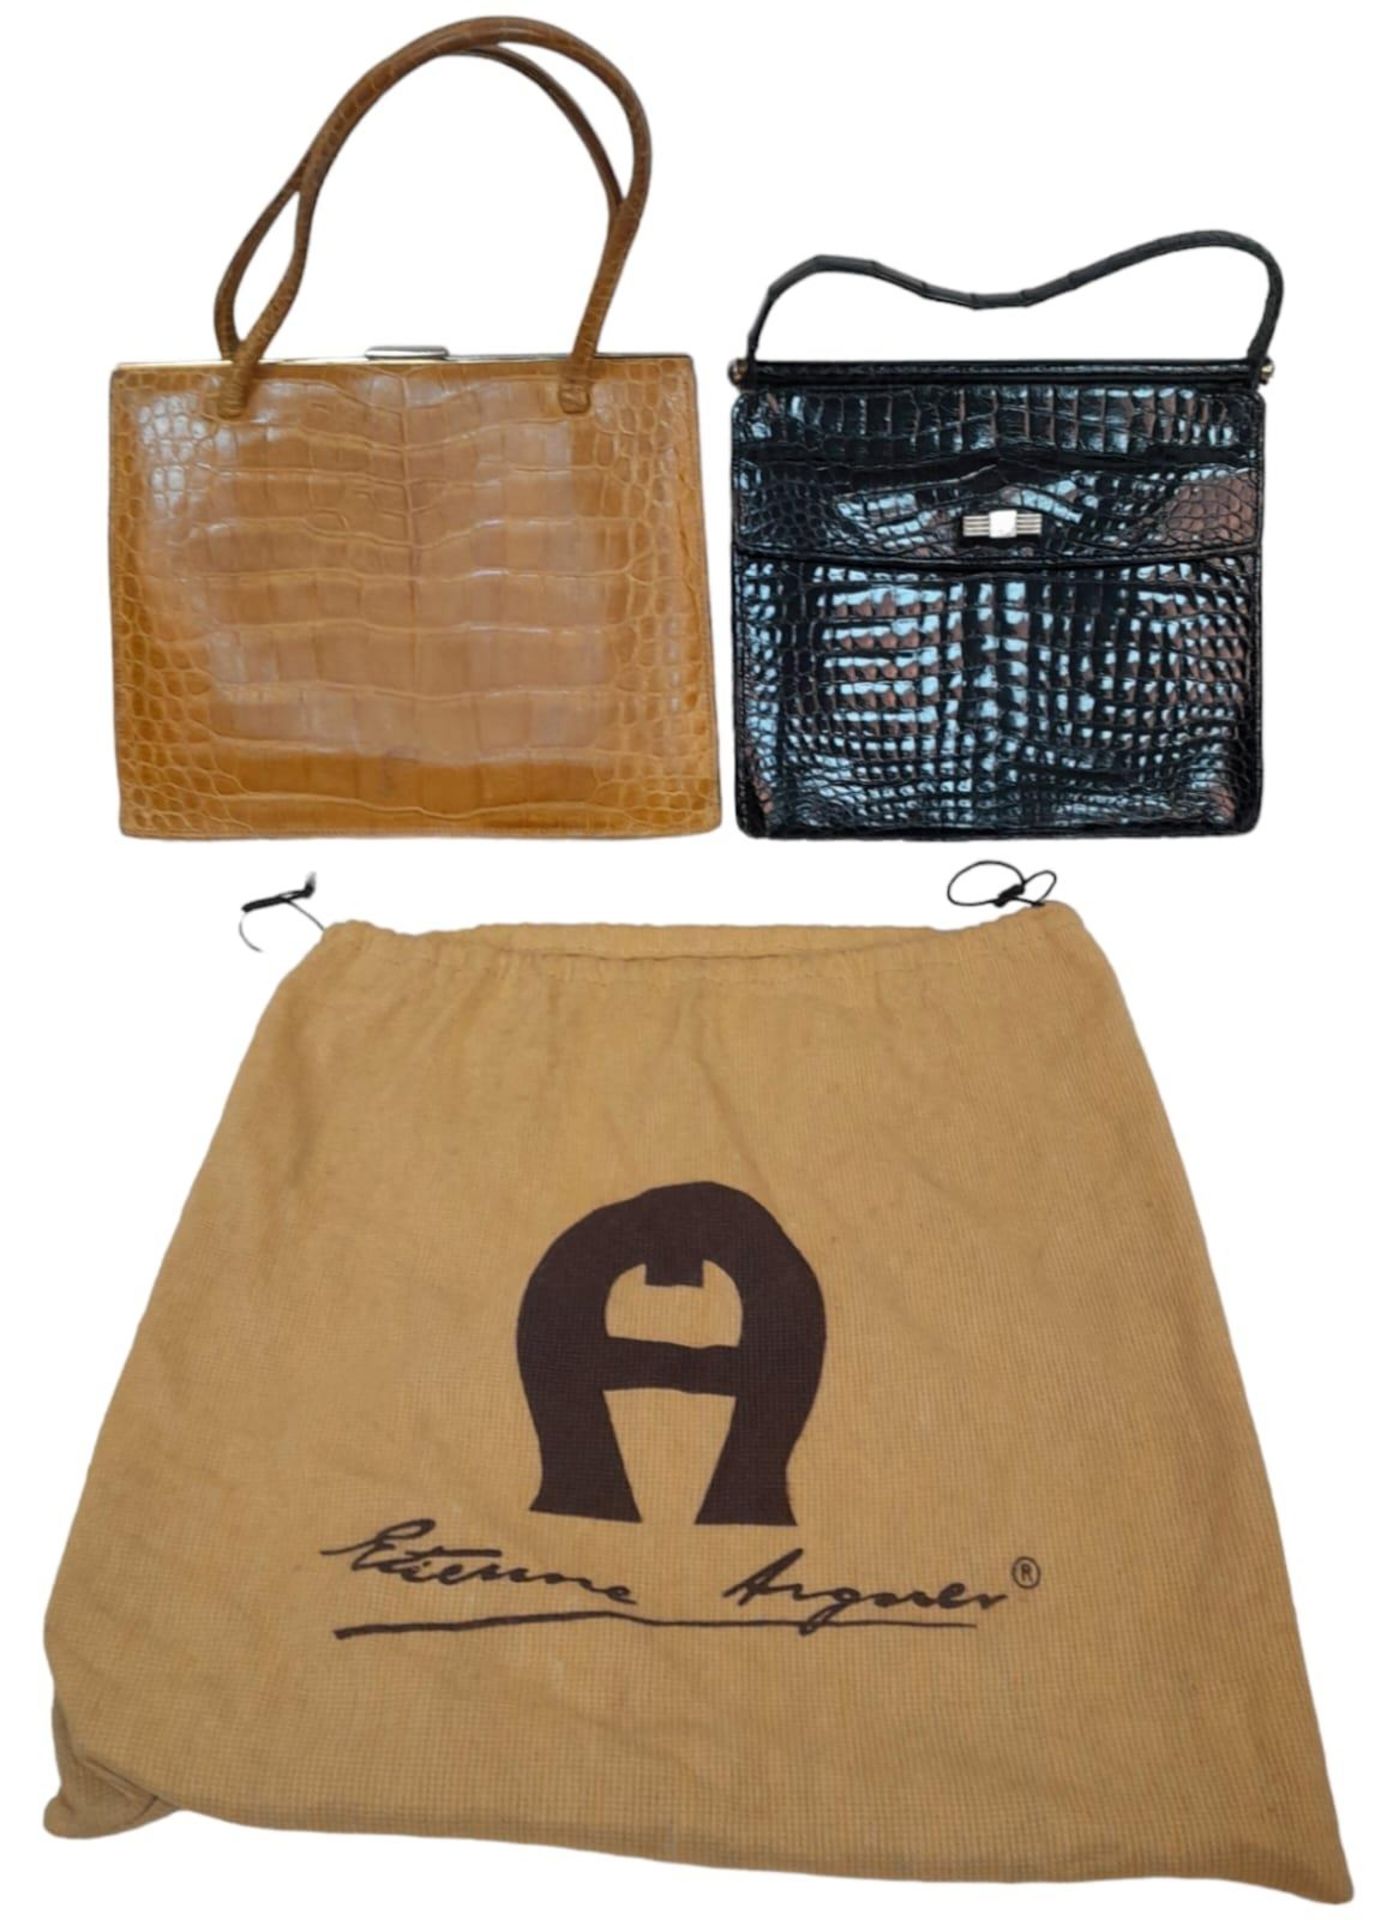 Two Crocodile Leather Hand Bags. Black crocodile bag has gold-toned hardware, a single strap and - Bild 3 aus 6